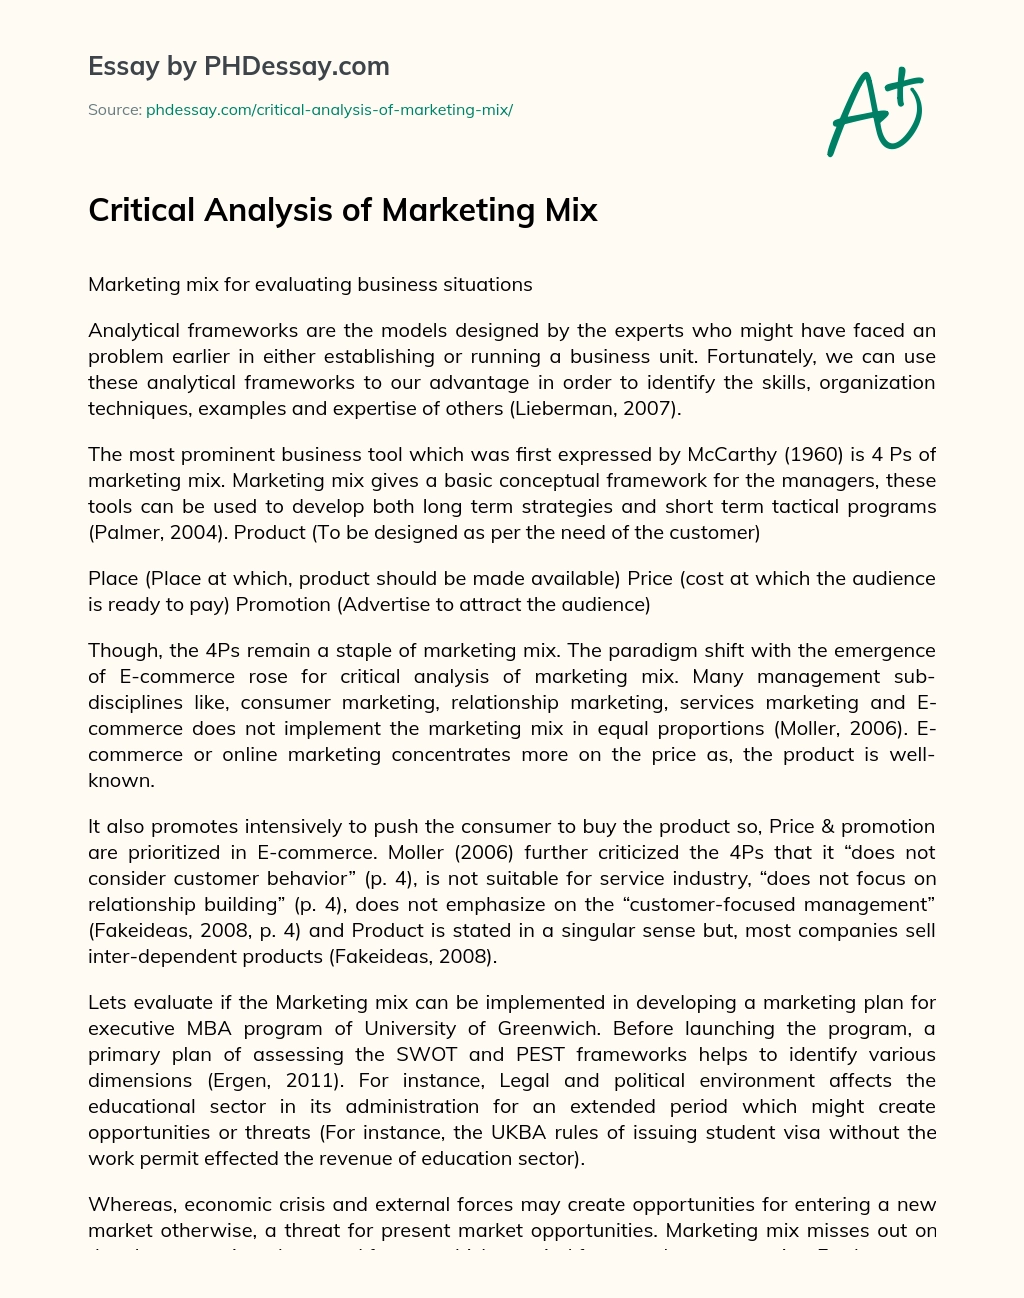 Critical Analysis of Marketing Mix essay